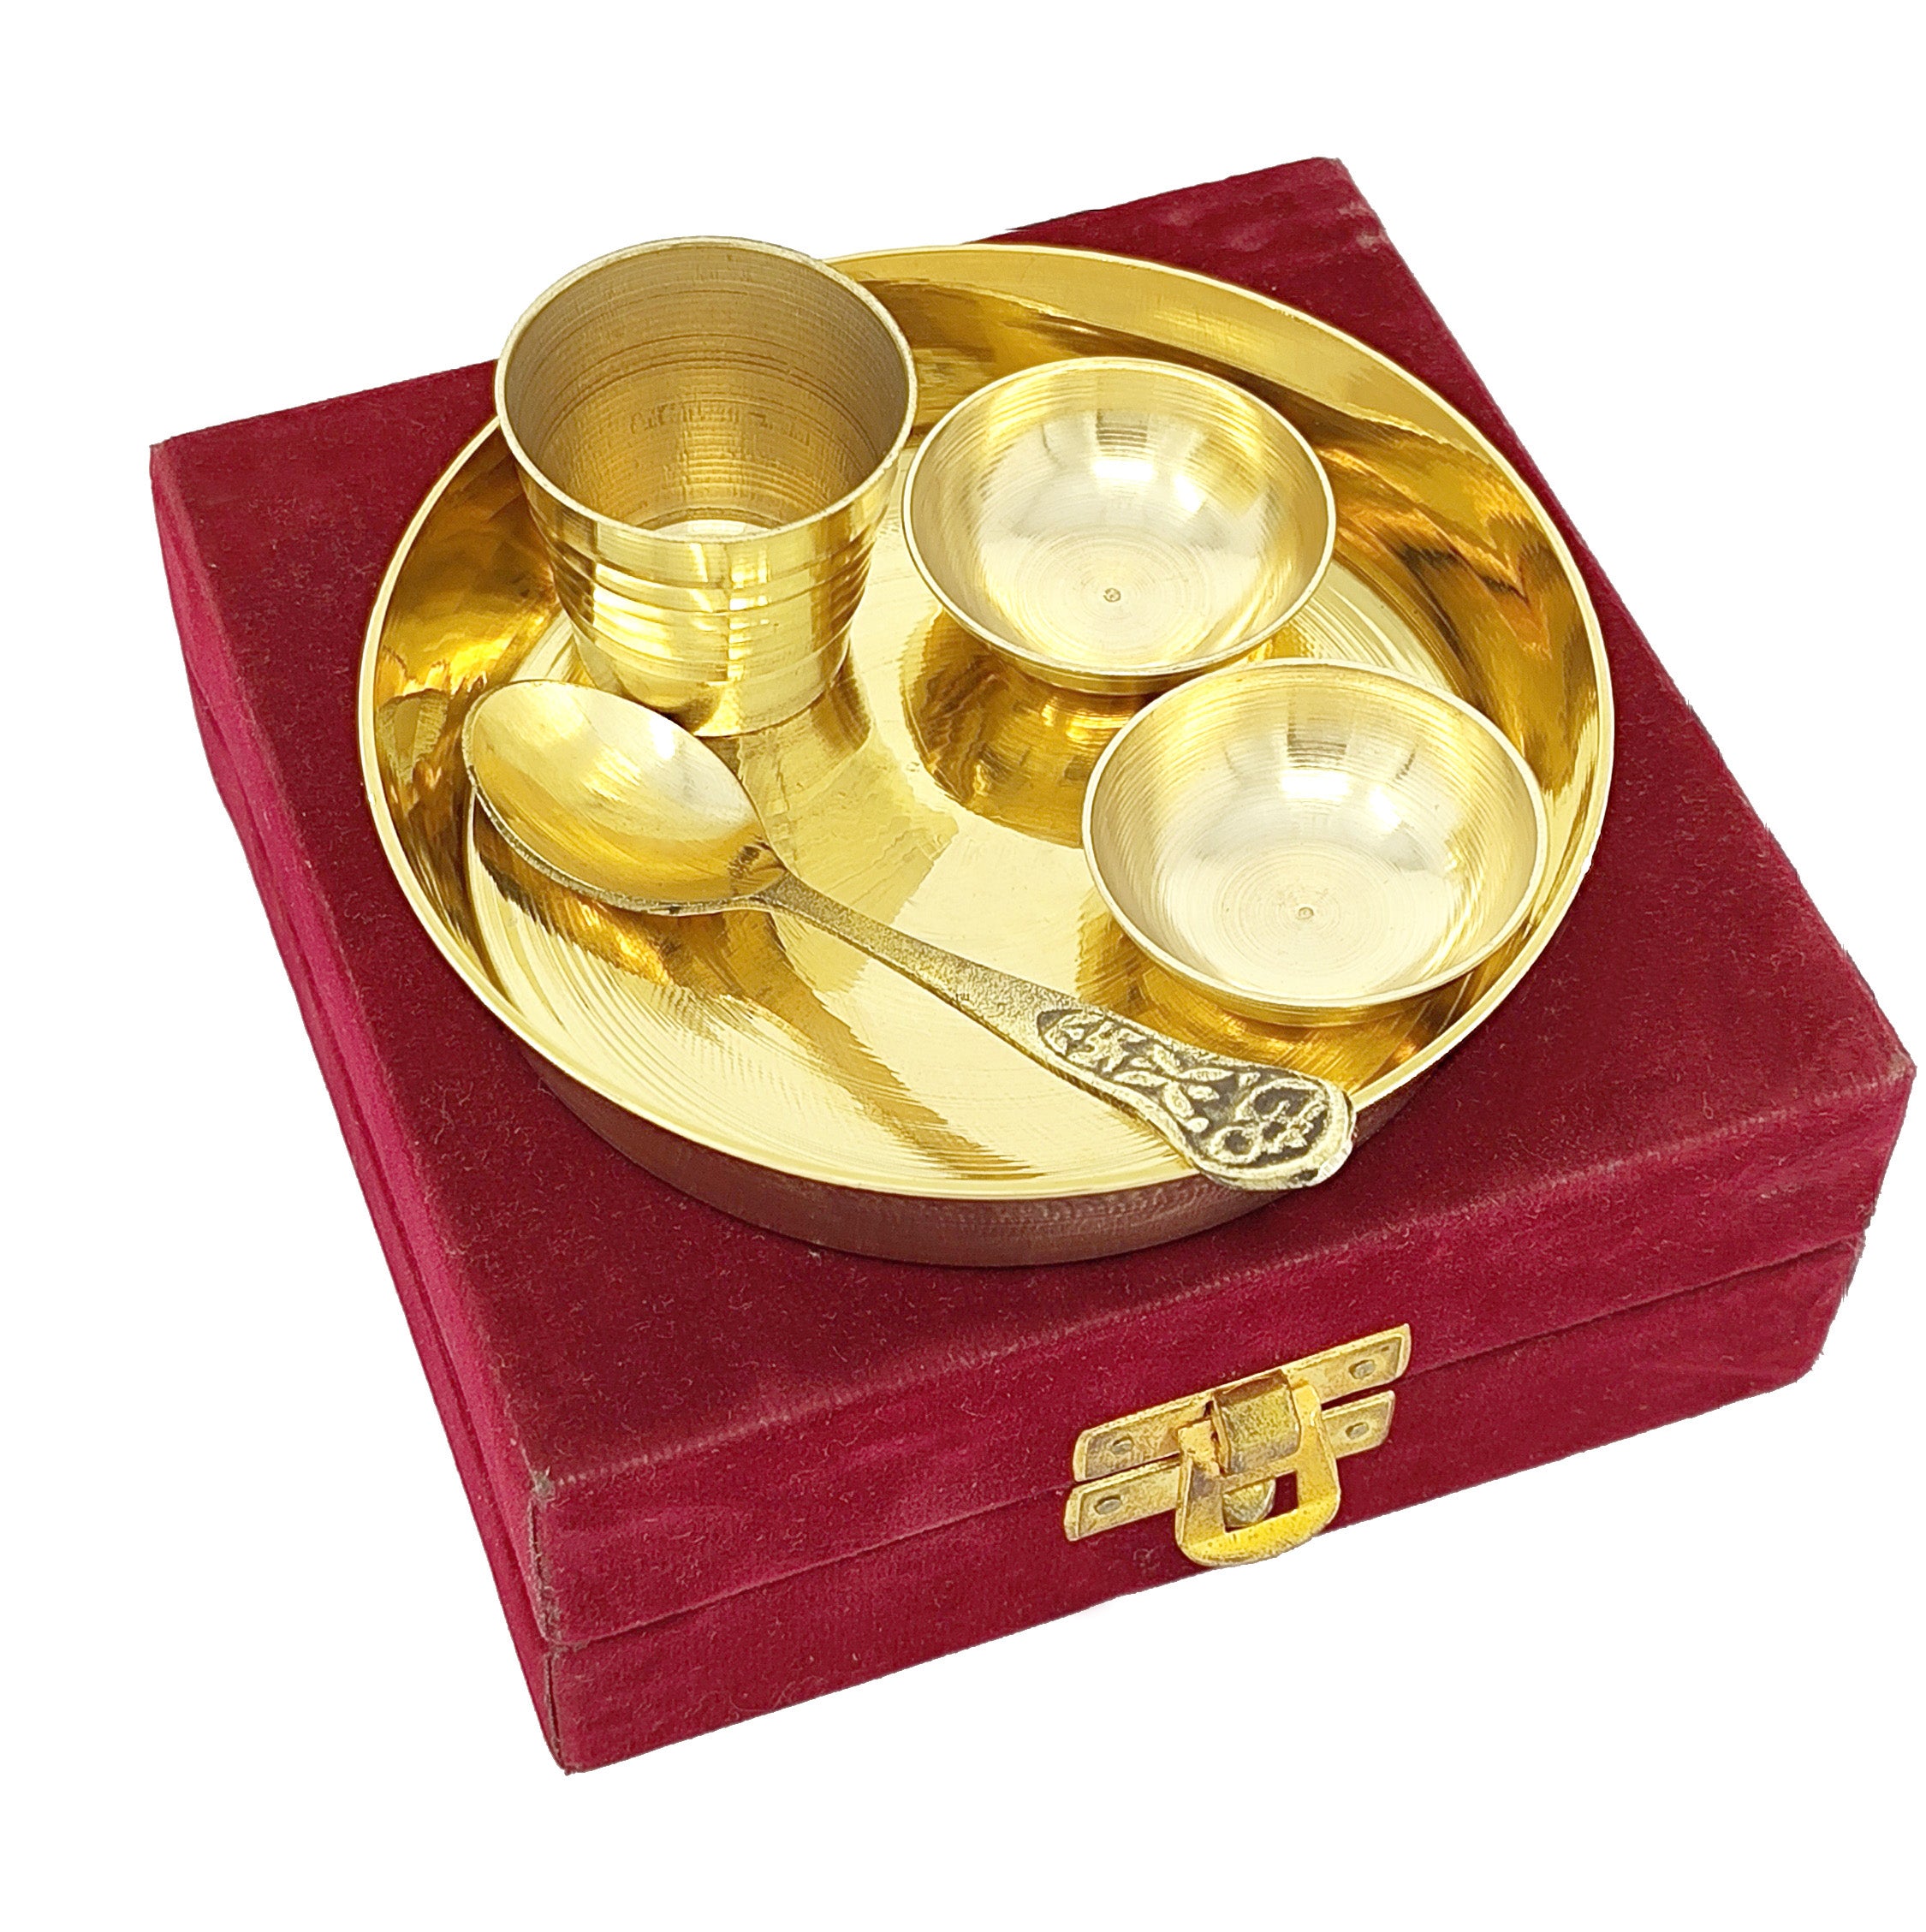 BENGALEN Laddu Gopal Bhog Thali Set Brass Small 5 Inch Pooja Set for Krishna Janmashtami Decoration Iskcon Gift Festival Krishna Puja Set for Home Office Mandir Items